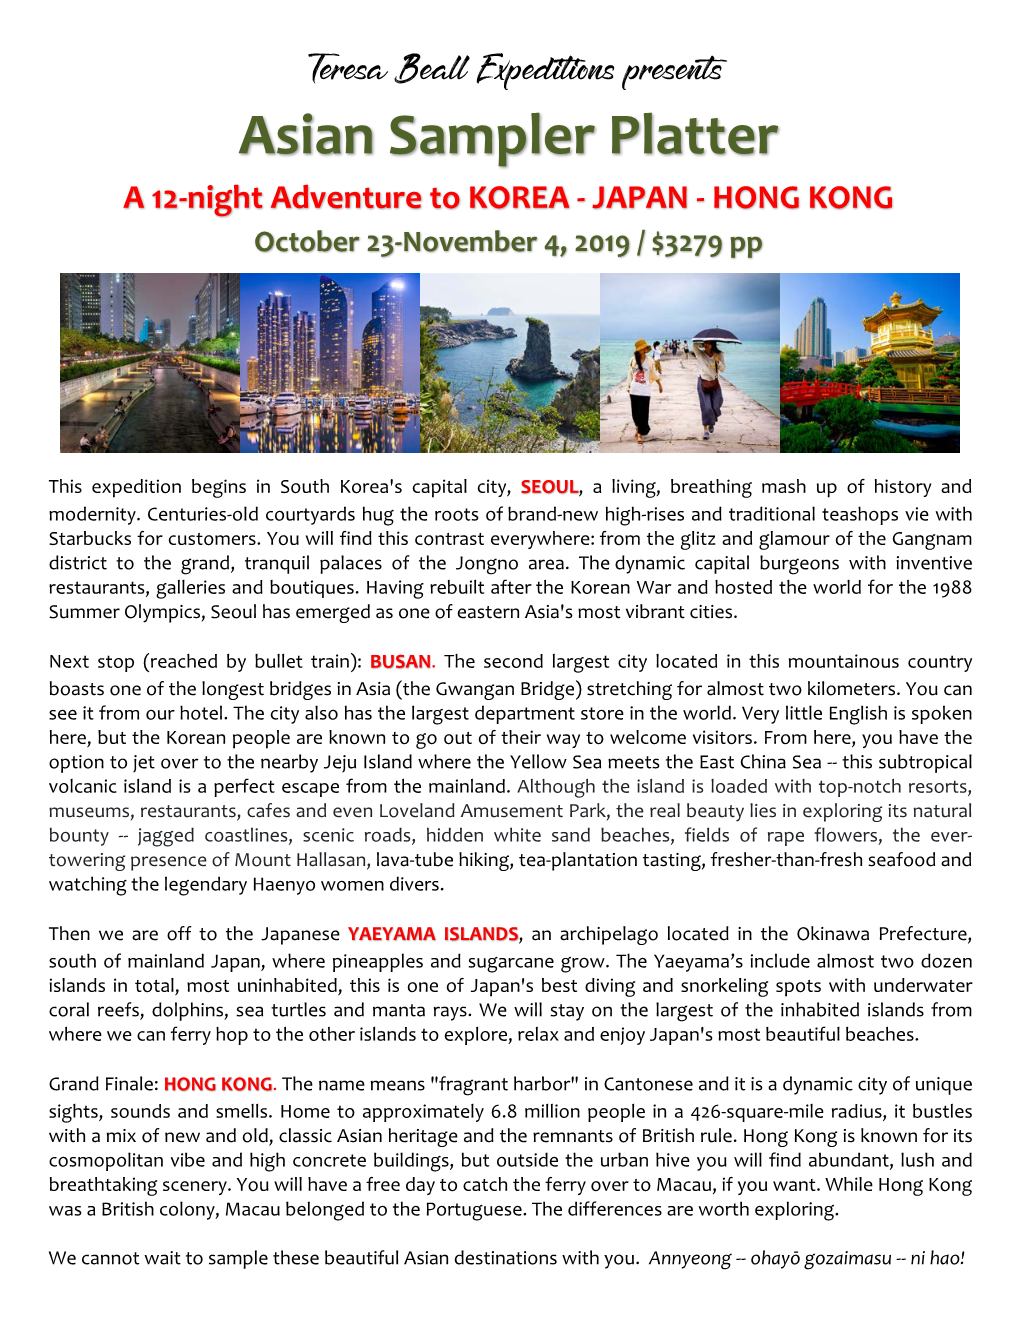 Asian Sampler Platter a 12-Night Adventure to KOREA - JAPAN - HONG KONG